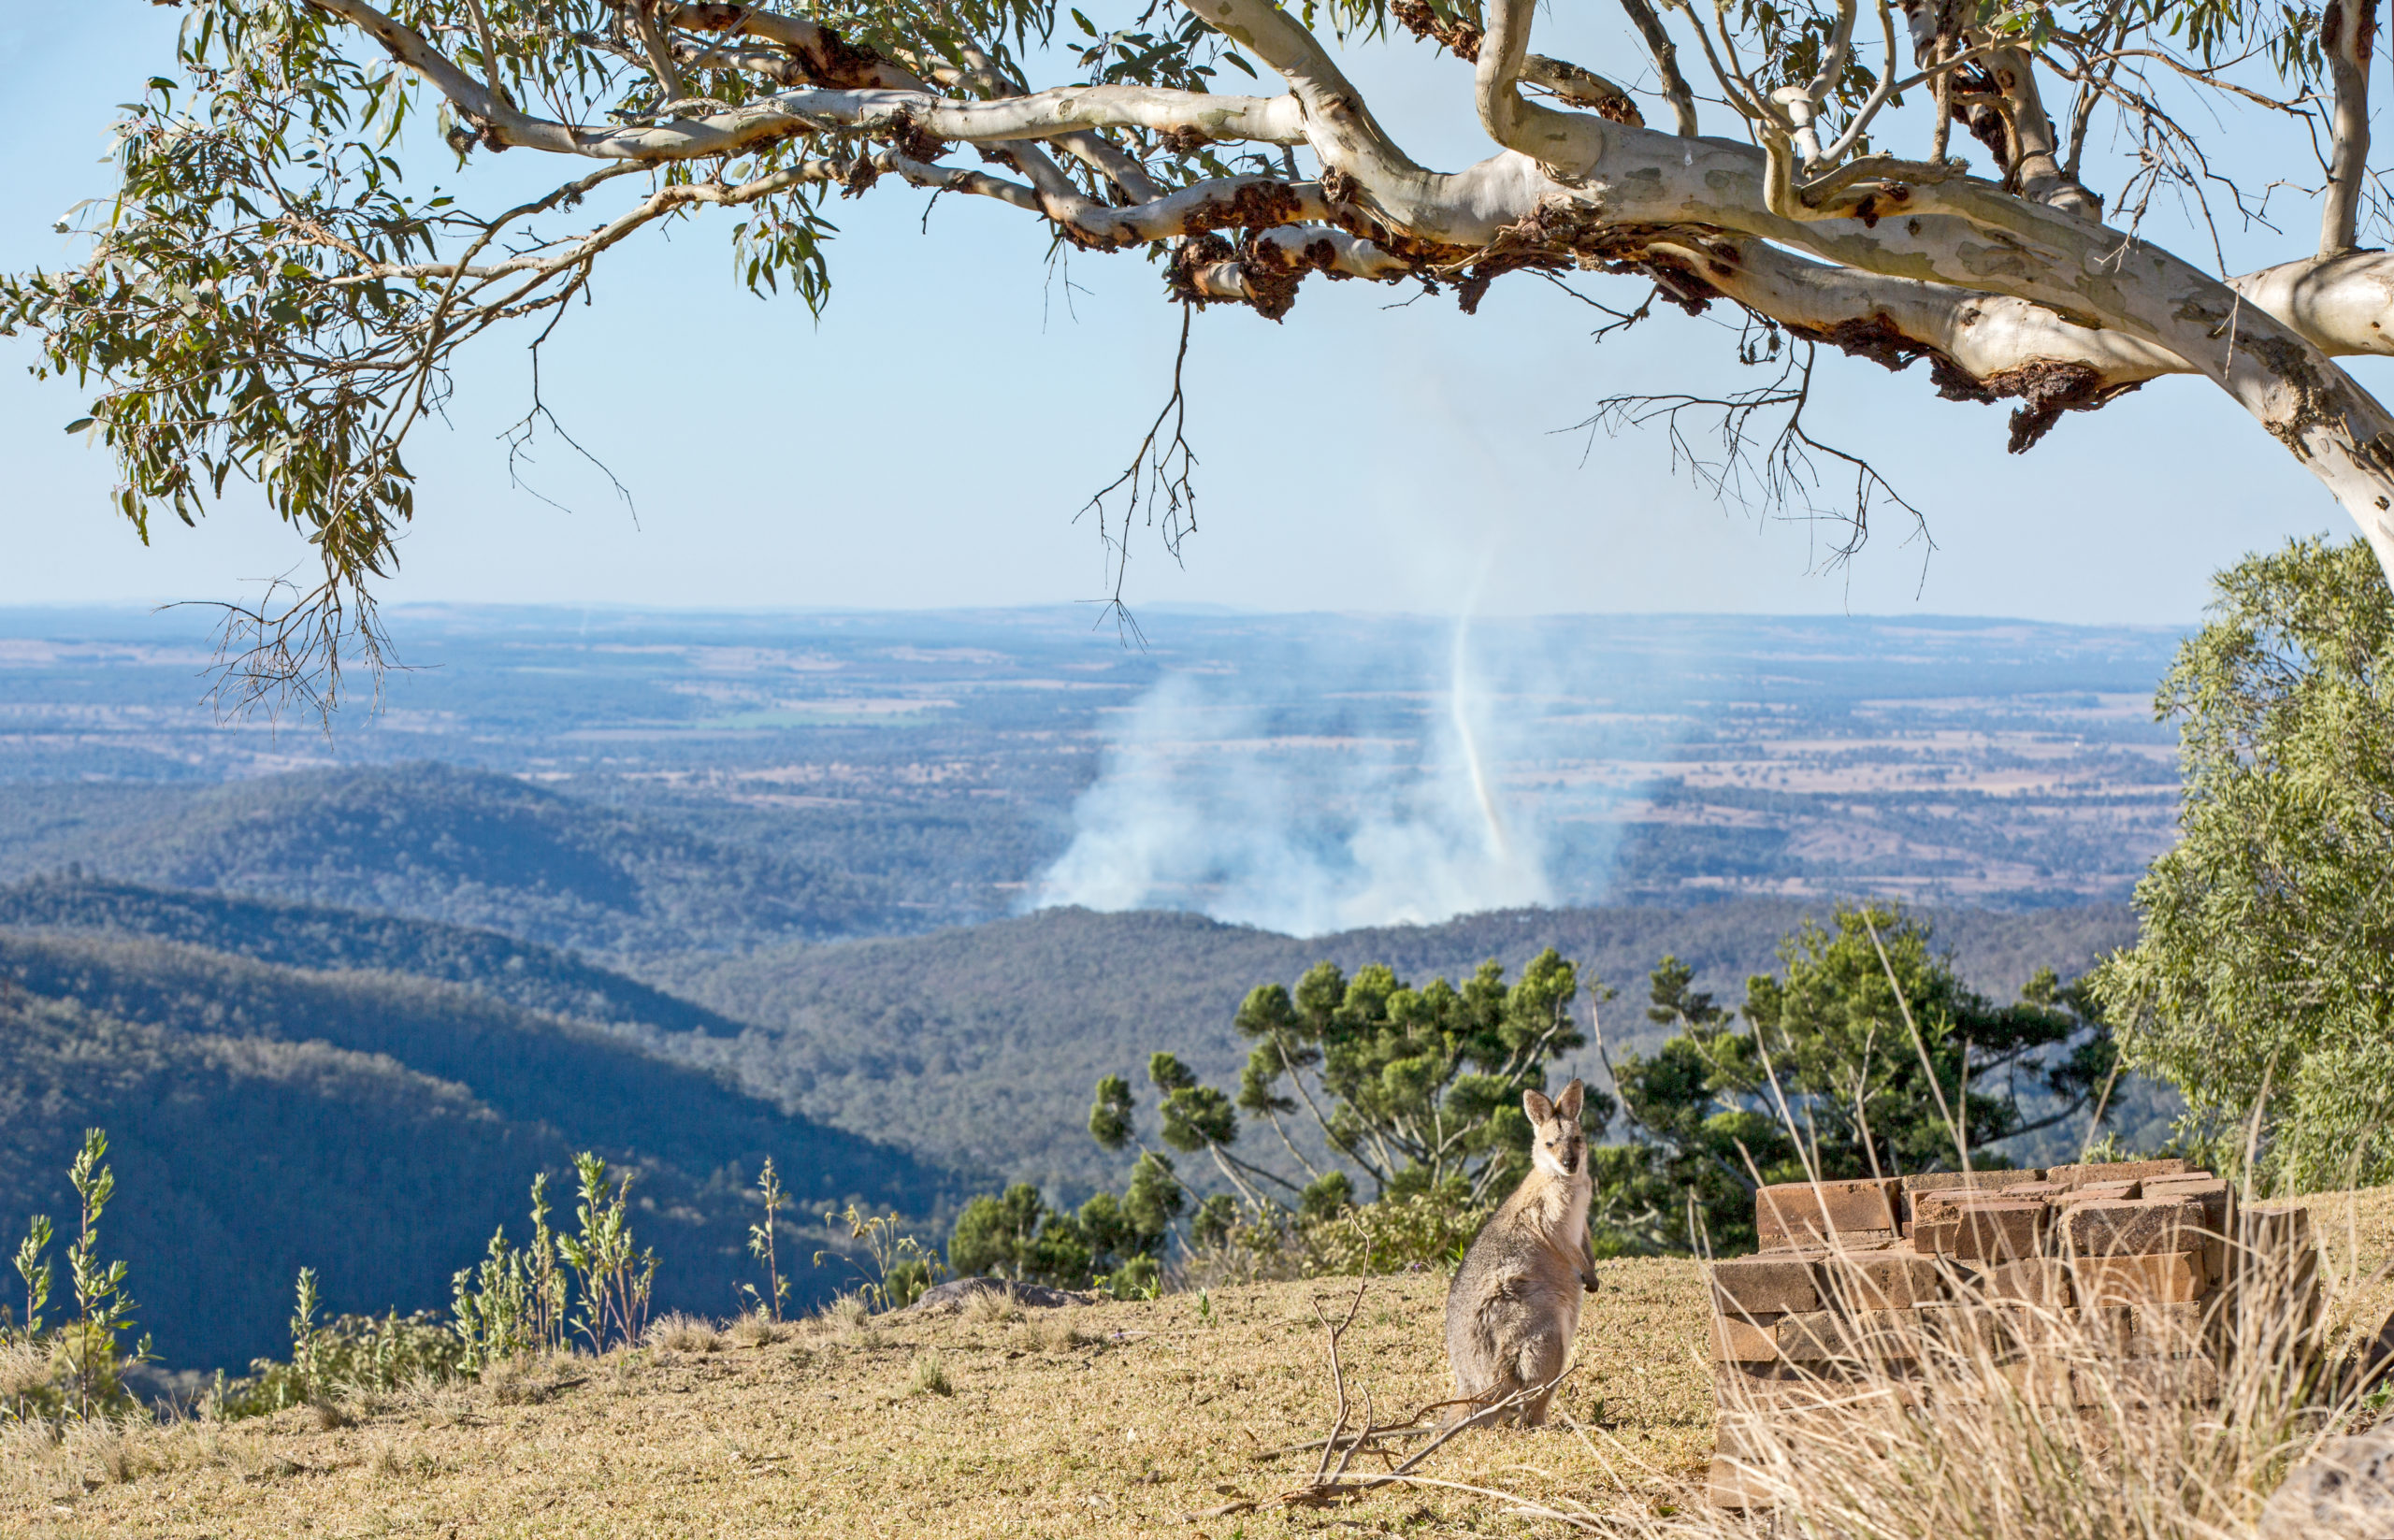 Australian Fire Tornado Caught on Camera | KWHL
